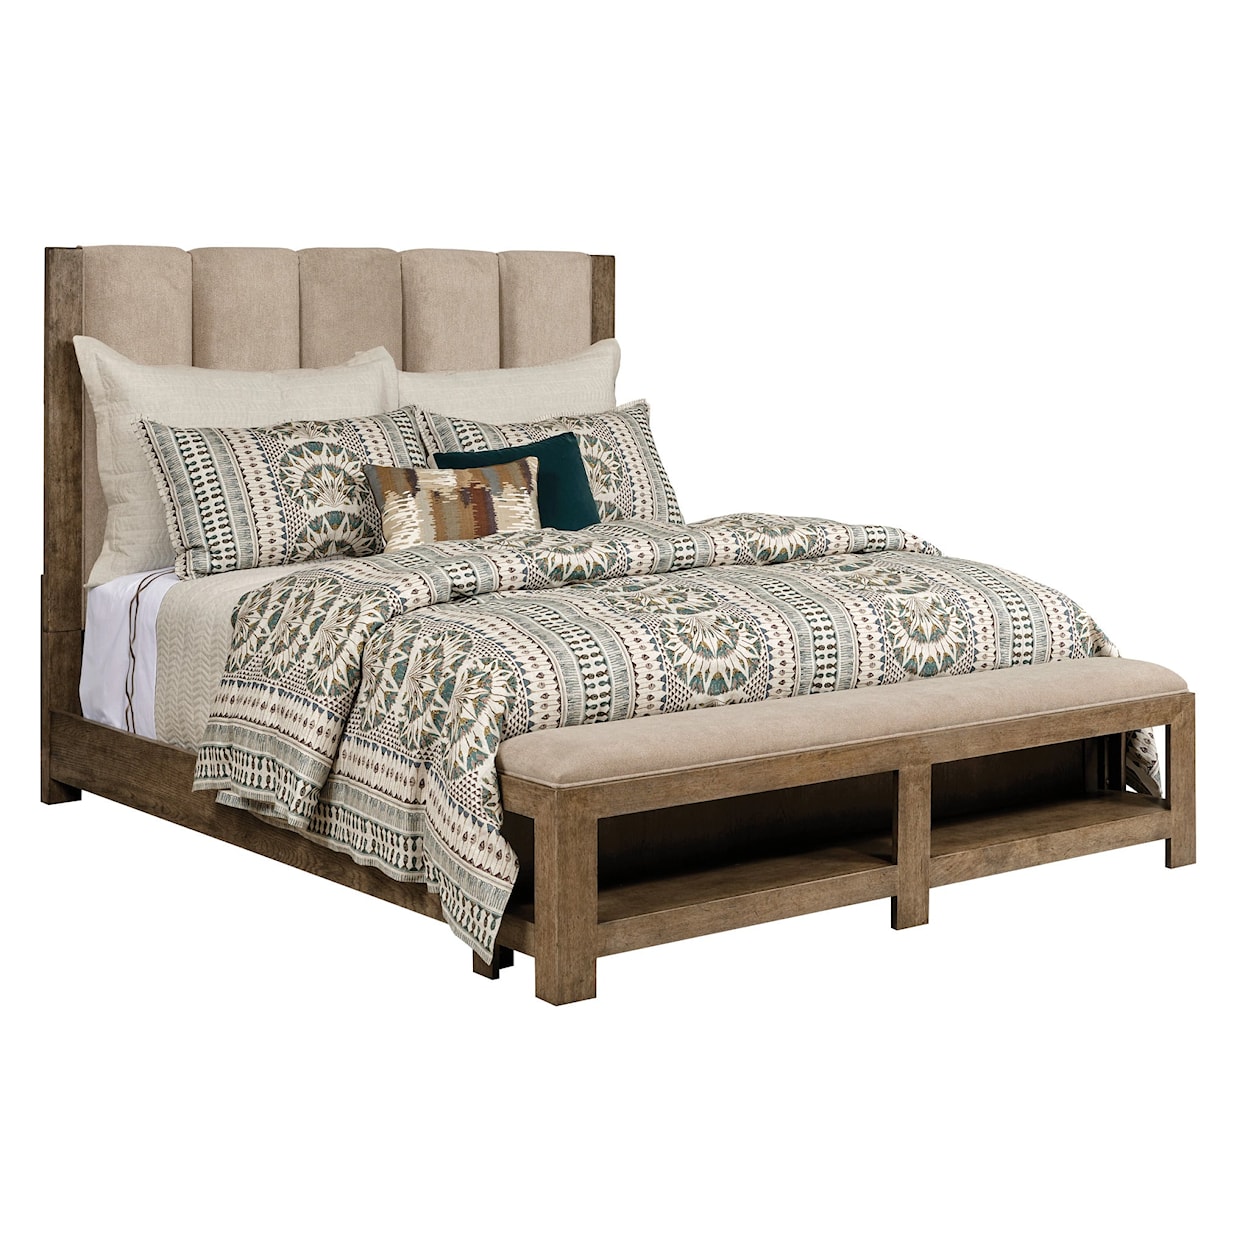 American Drew Skyline Queen Meadowood Upholstered Bed